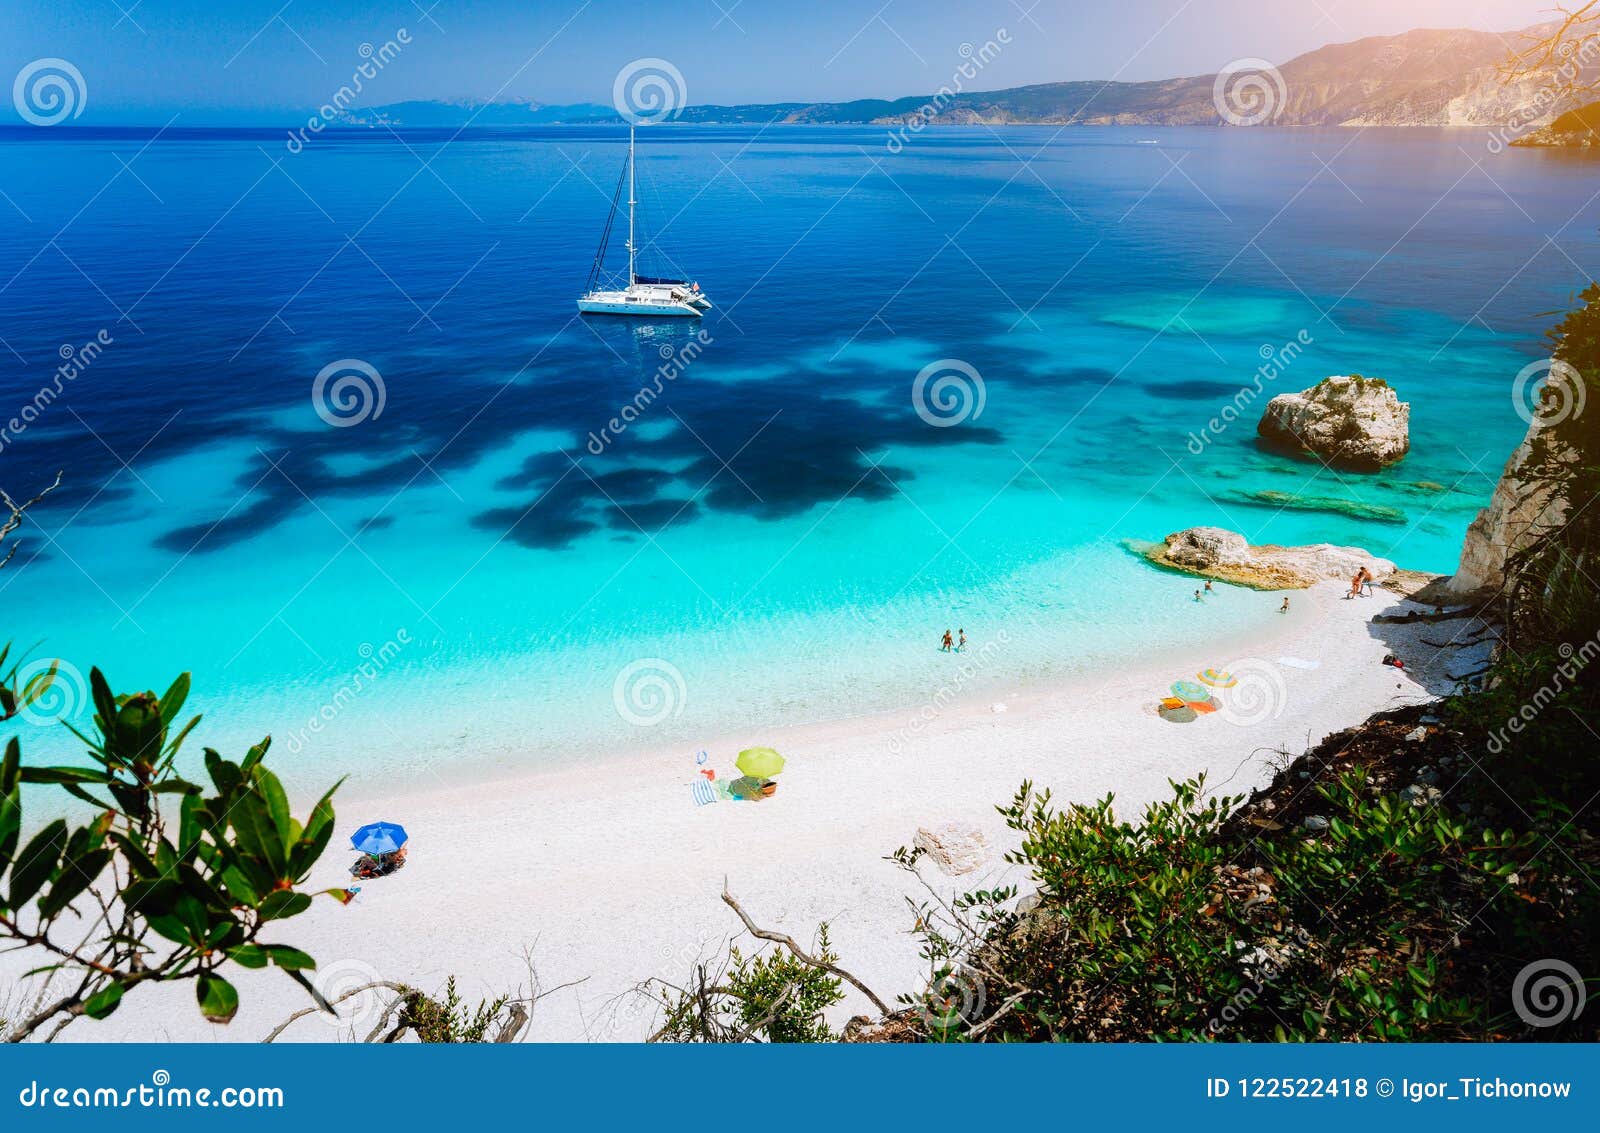 fteri beach, cephalonia kefalonia, greece. white catamaran yacht in clear blue sea water. tourists on sandy beach near